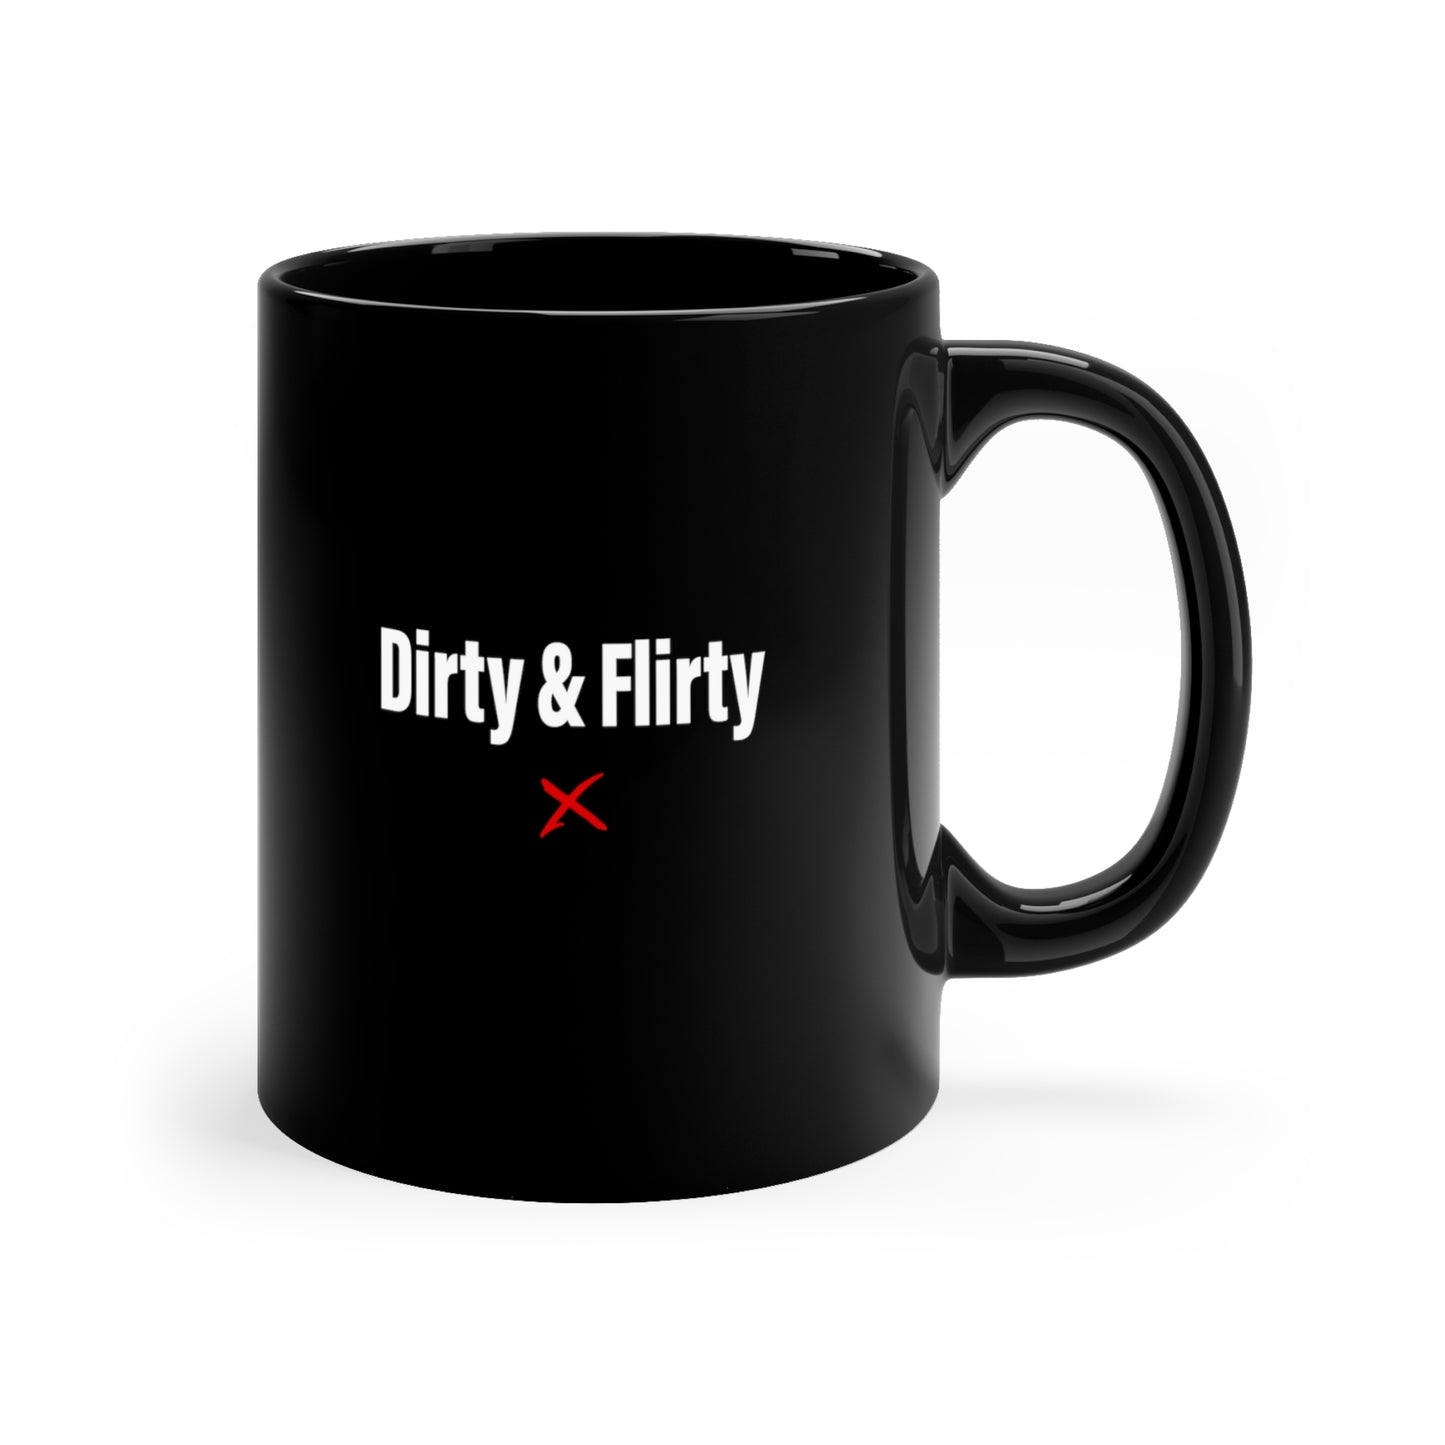 Dirty & Flirty - Mug